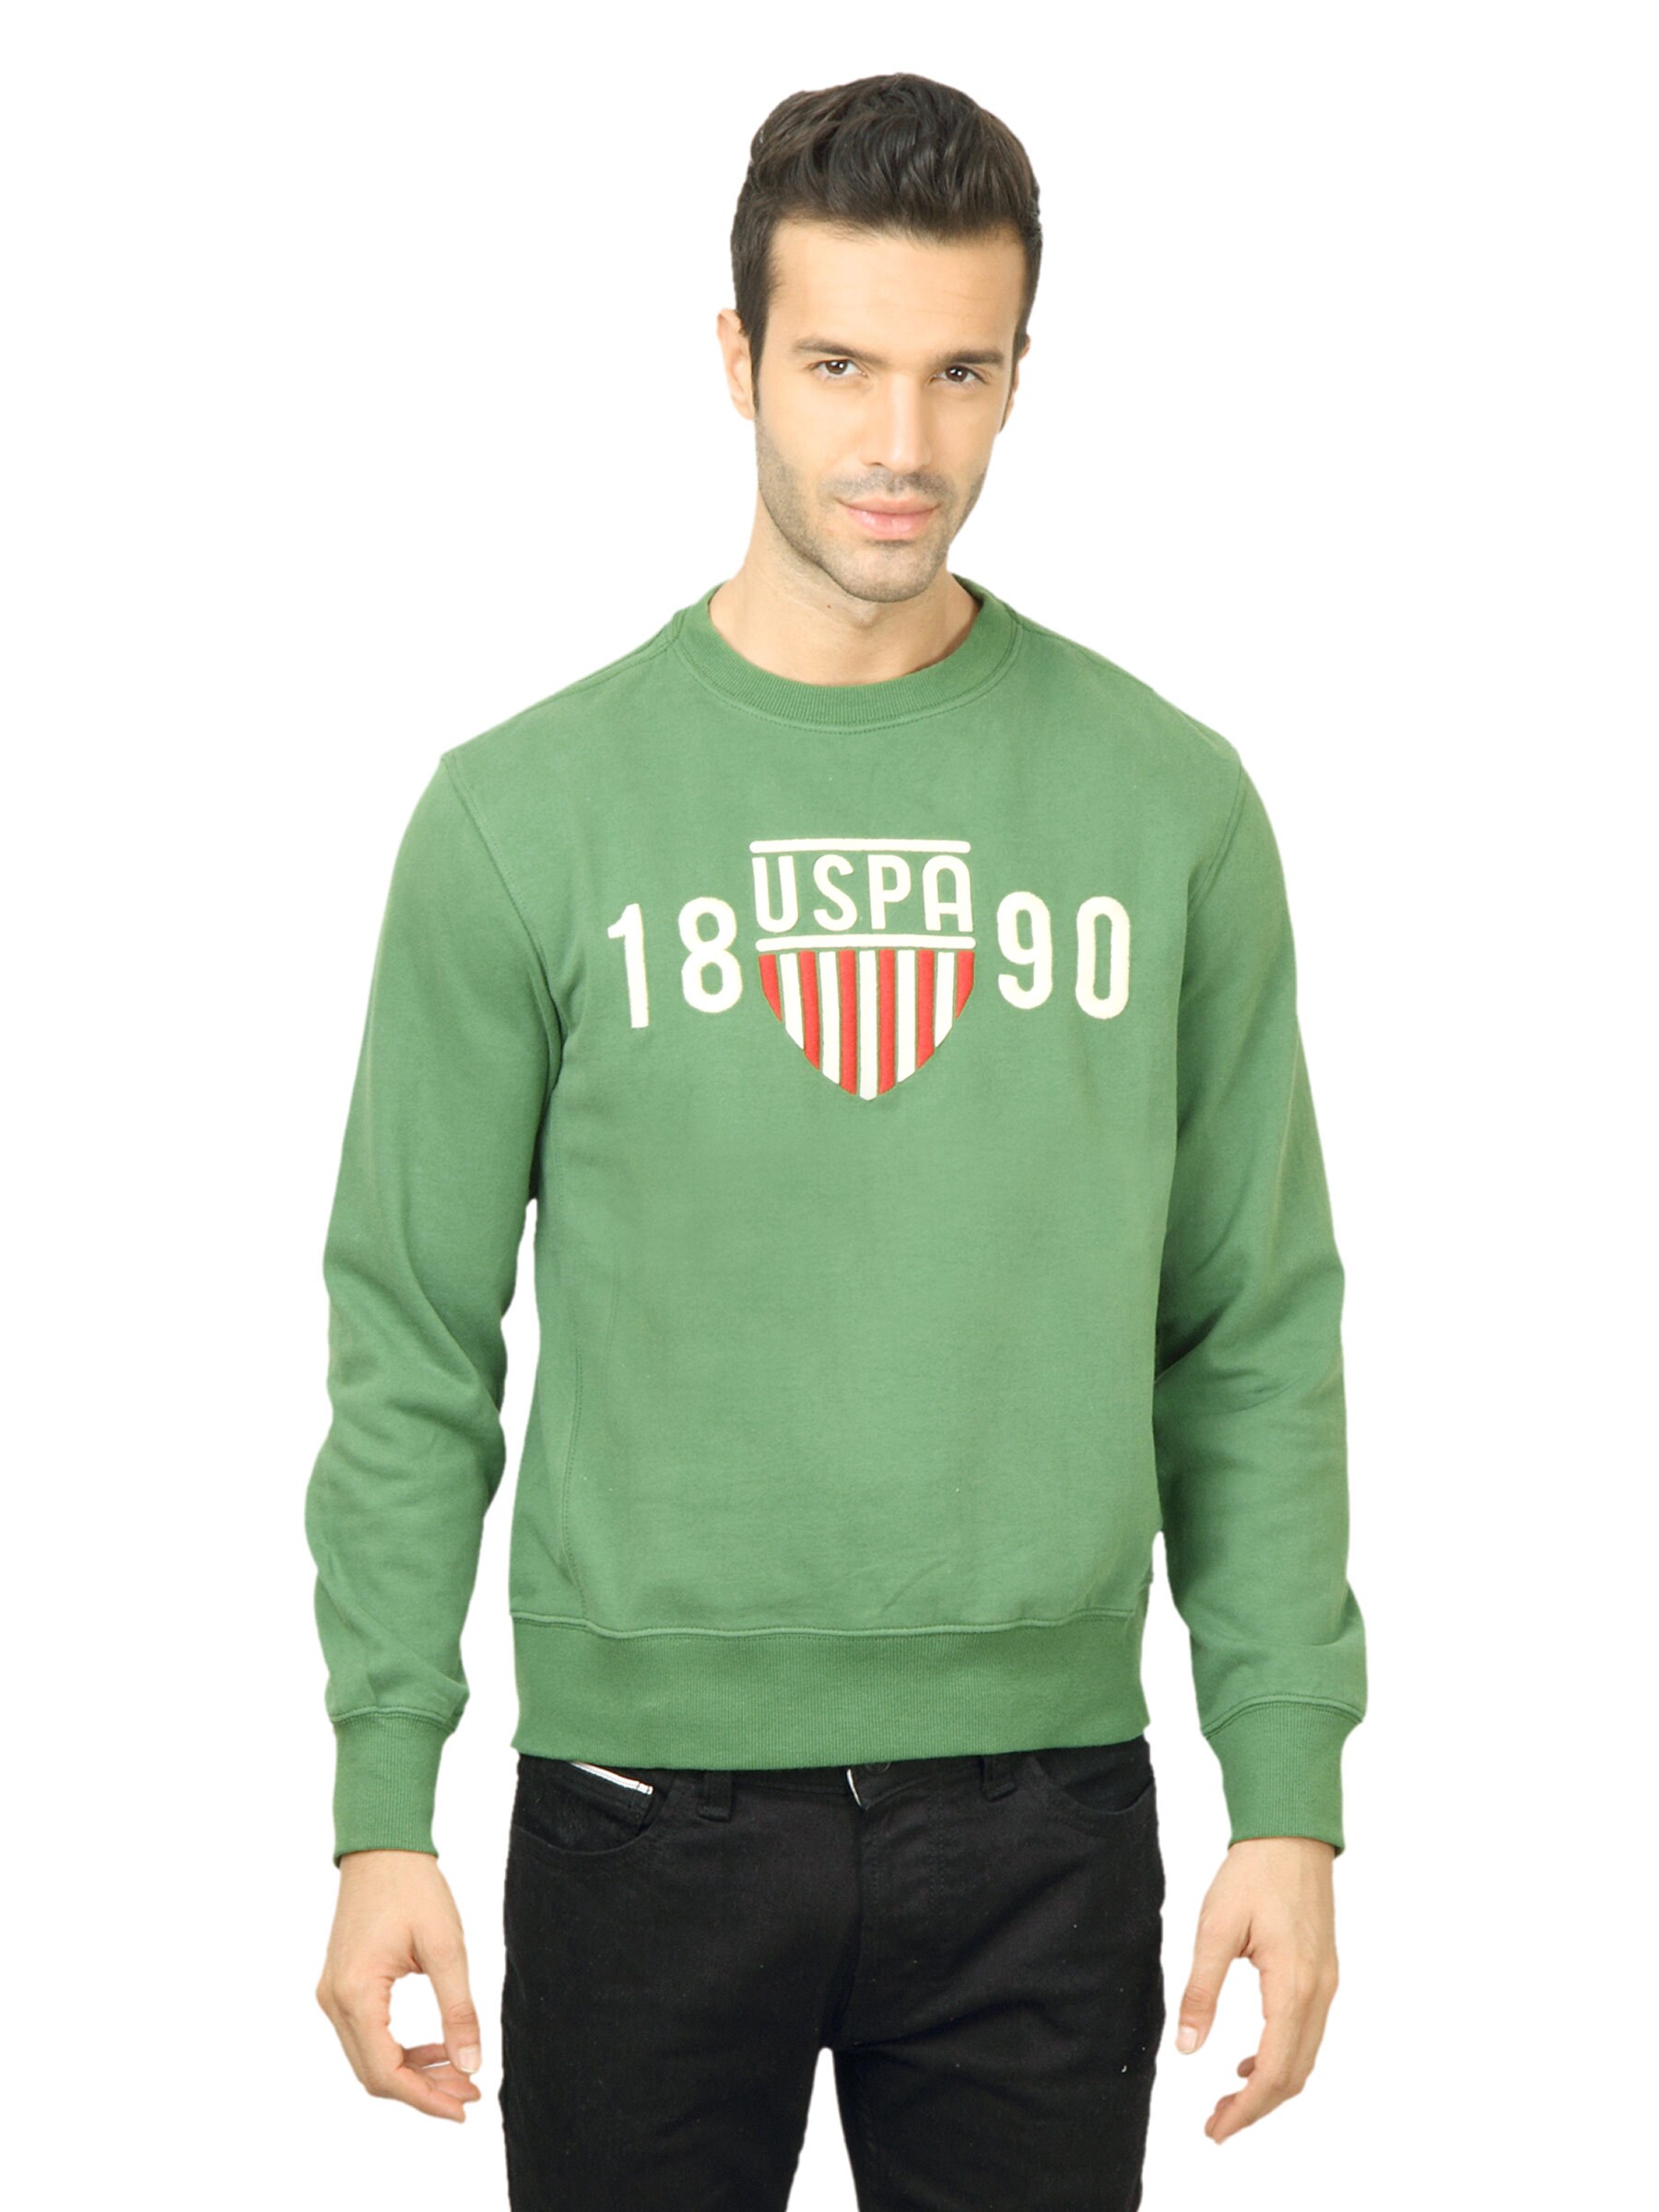 U.S. Polo Assn. Men Solid Green Sweatshirt